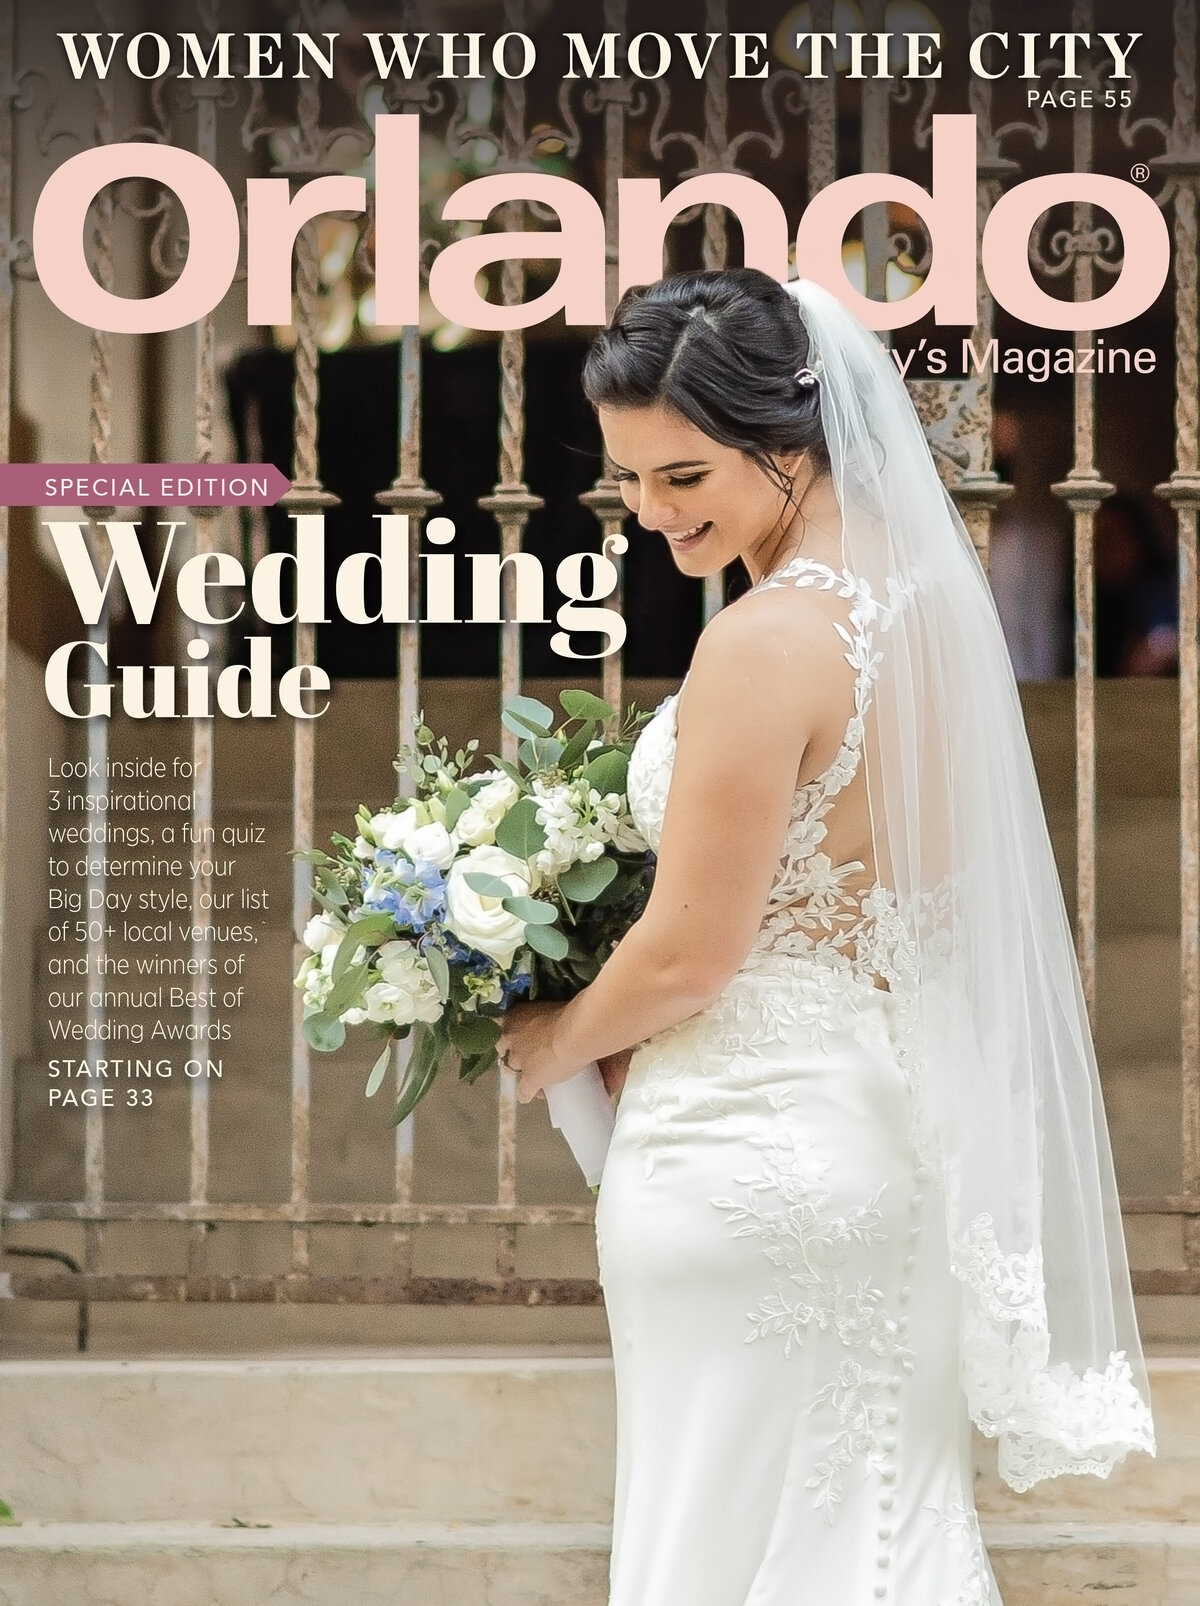 ORLCM_210600_Wedding_Cover copy